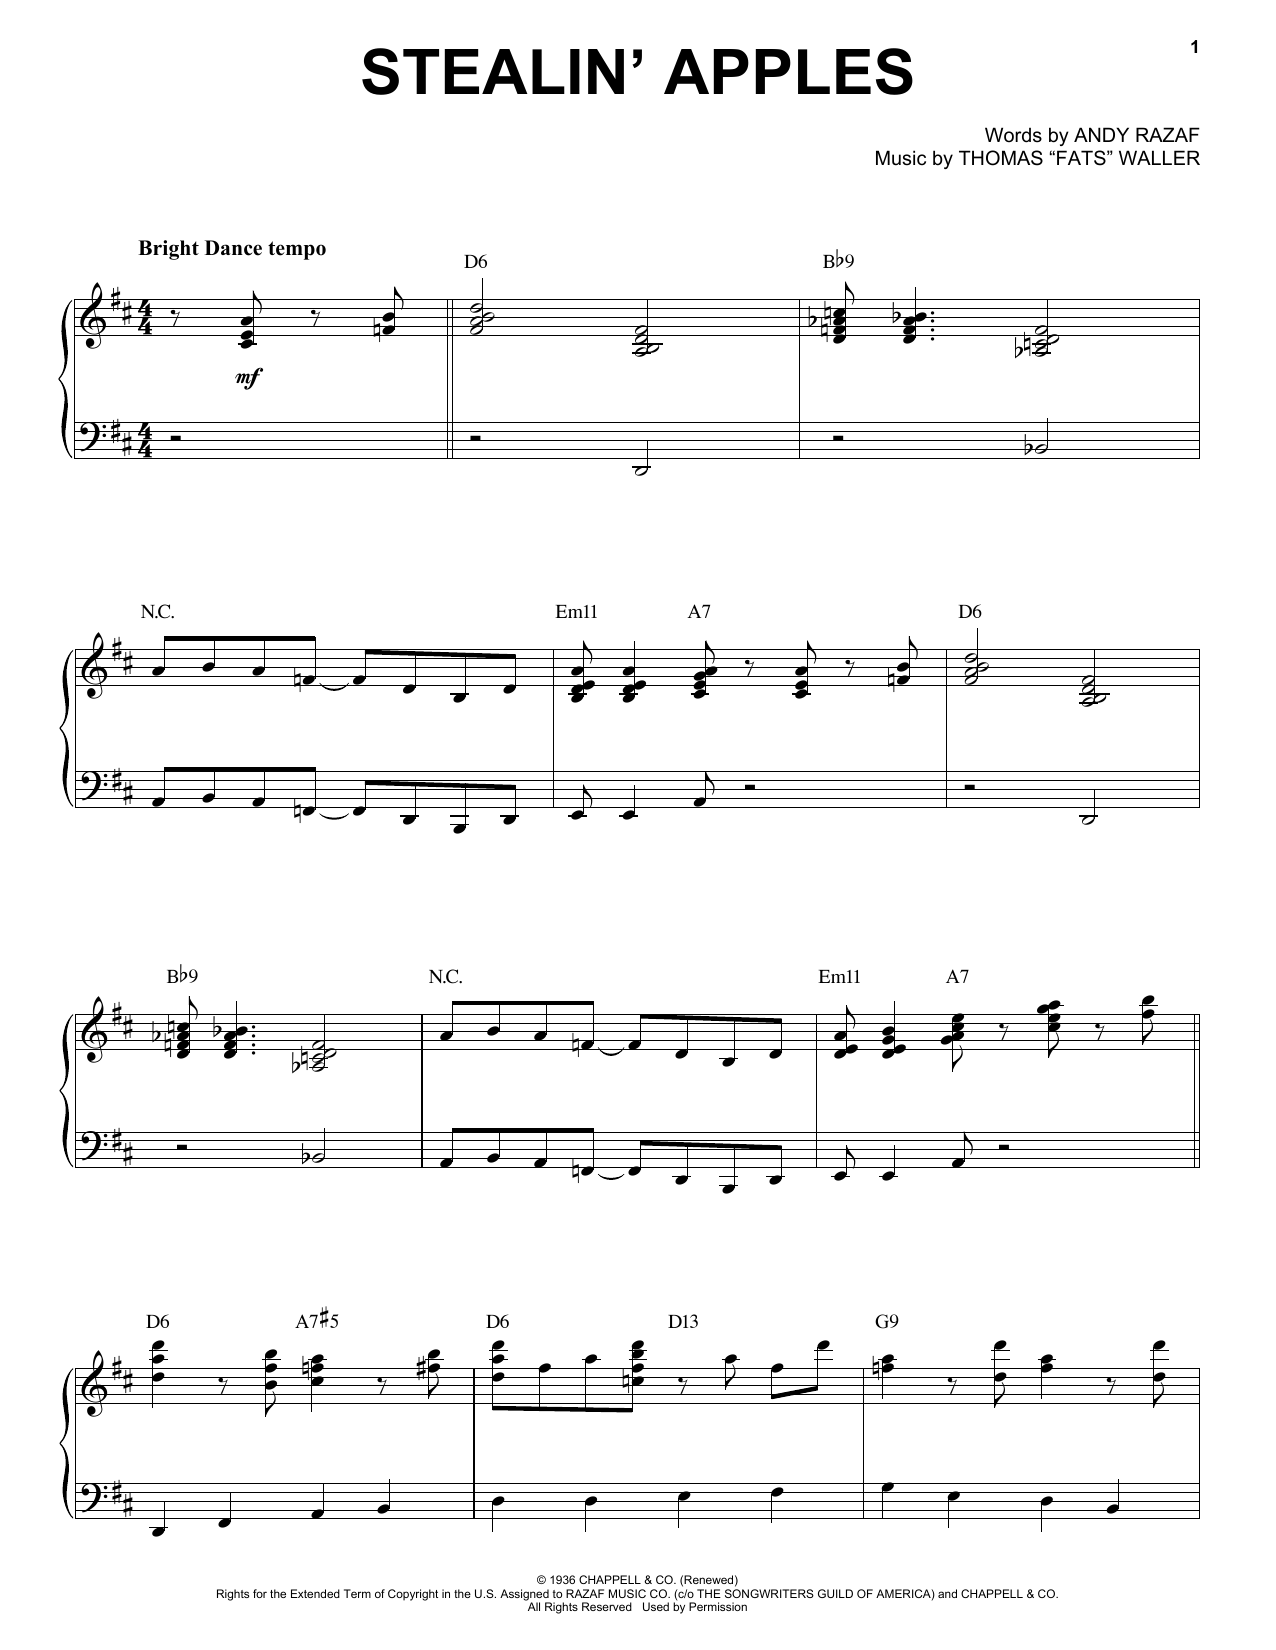 Benny Goodman Stealin' Apples sheet music notes and chords. Download Printable PDF.